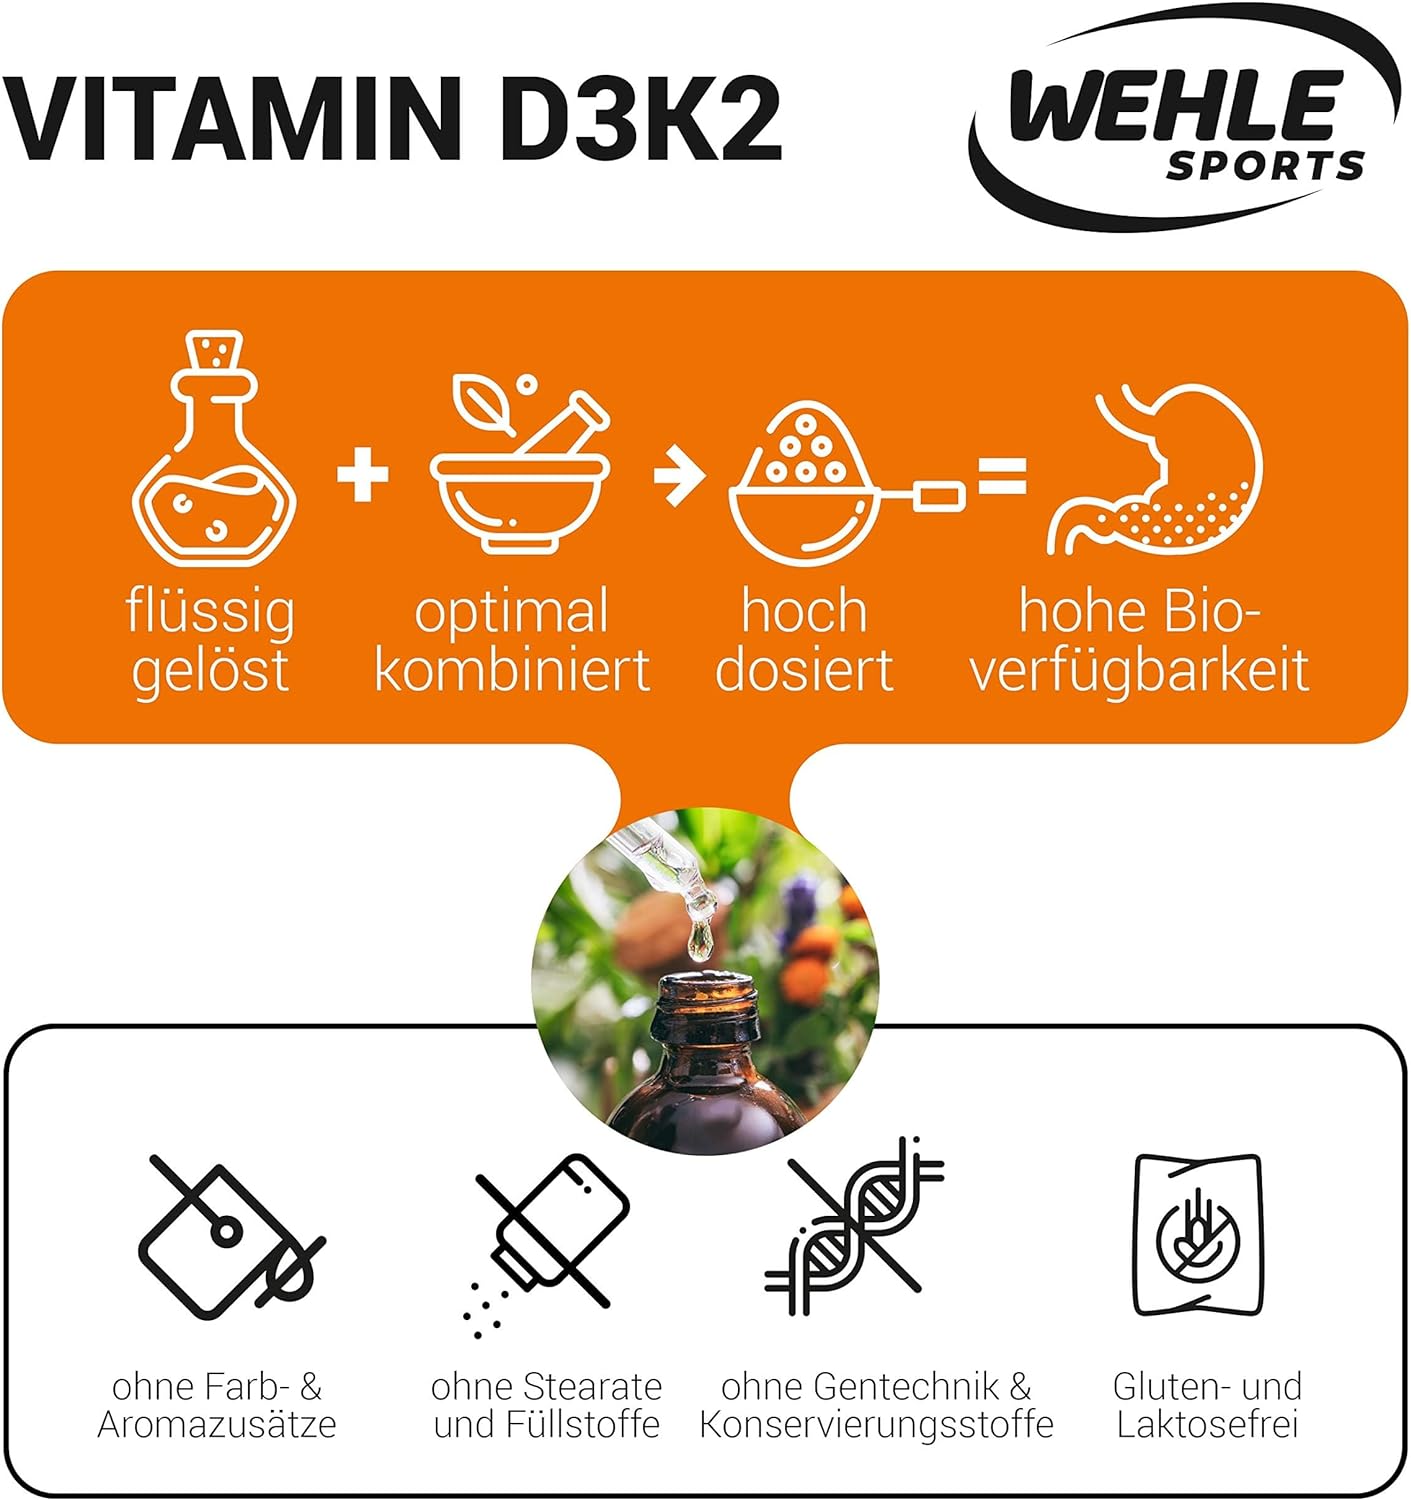 Wehle Sports Vitamin D3 K2 Tropfen - 1700 Tropfen 50ml